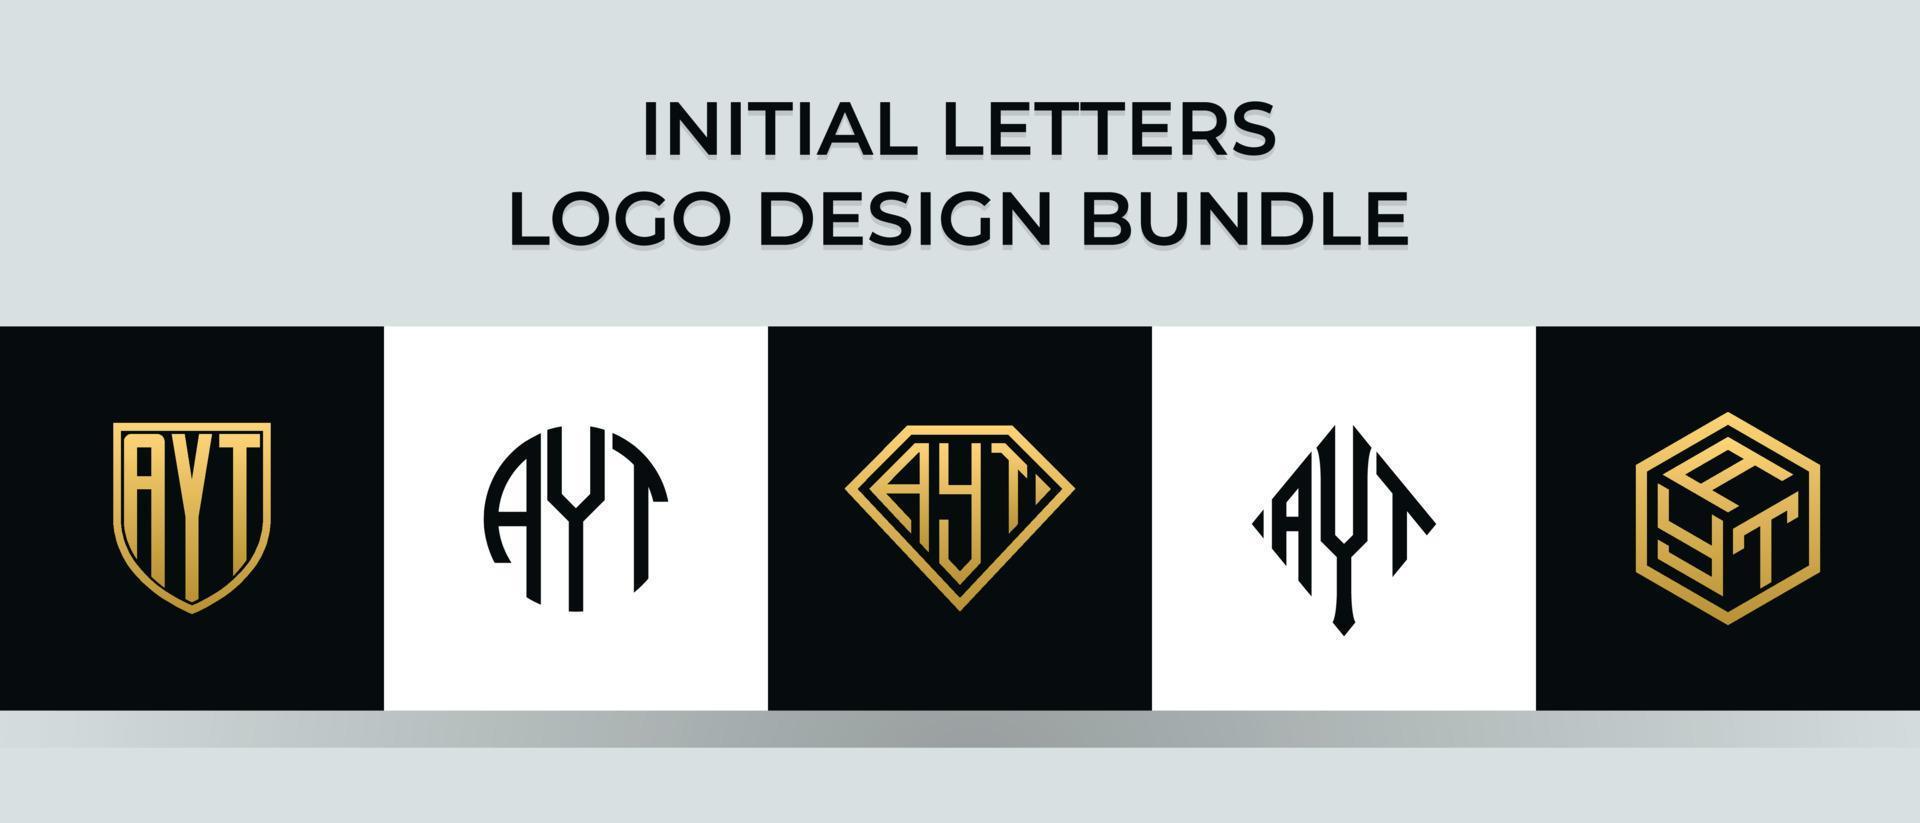 Initial letters AYT logo designs Bundle vector